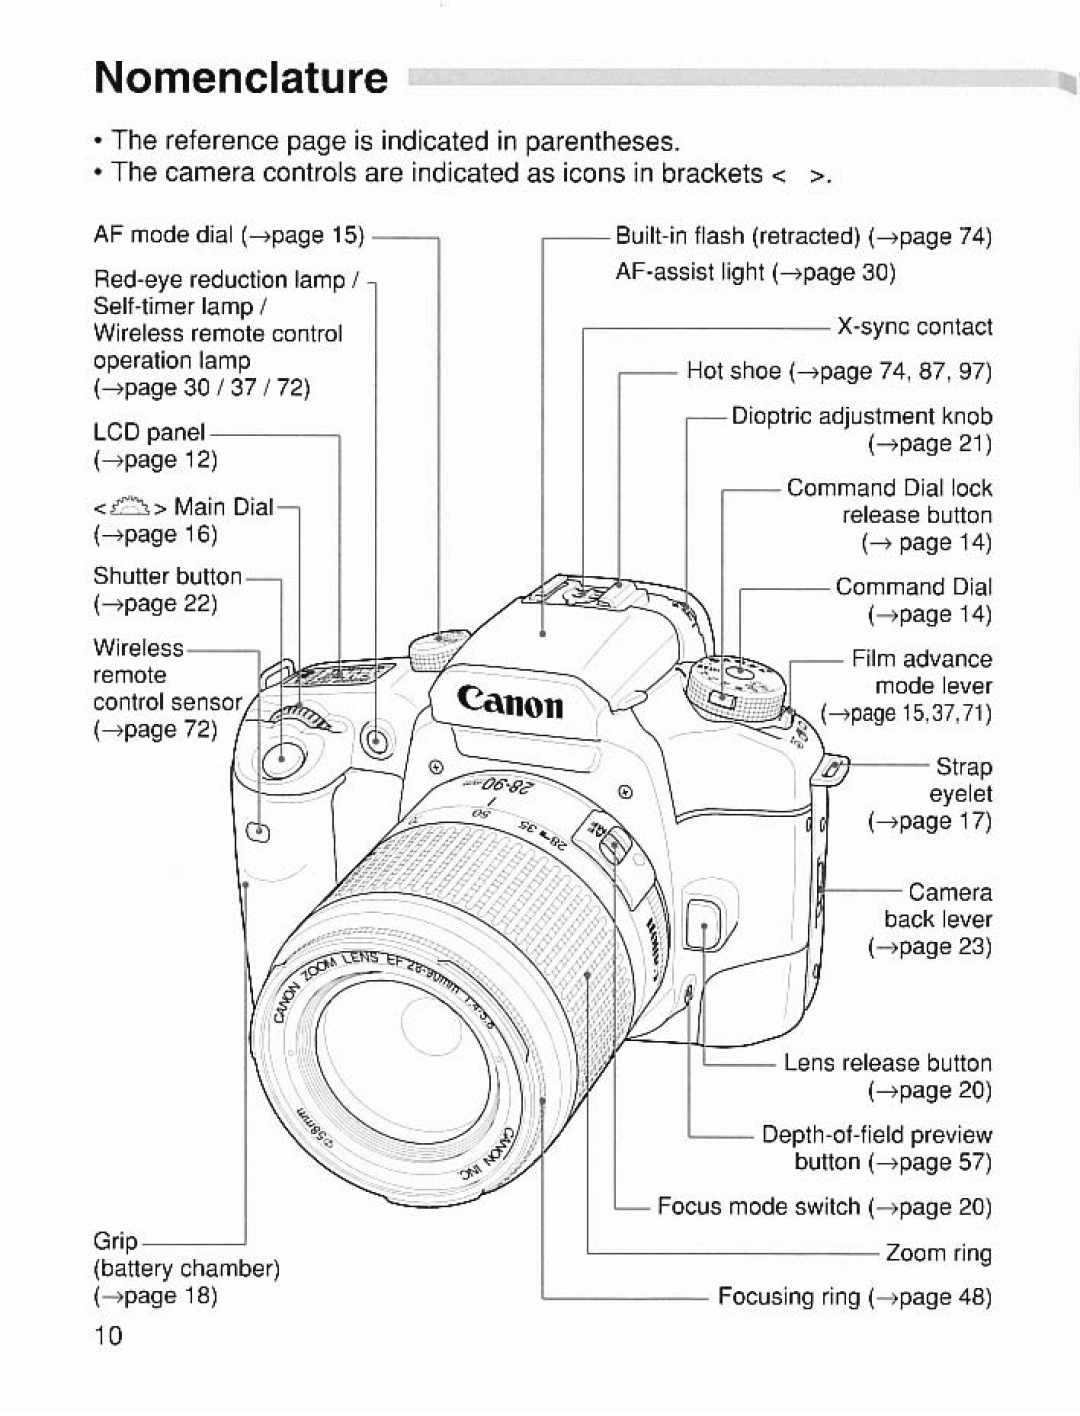 Canon 7 manual 